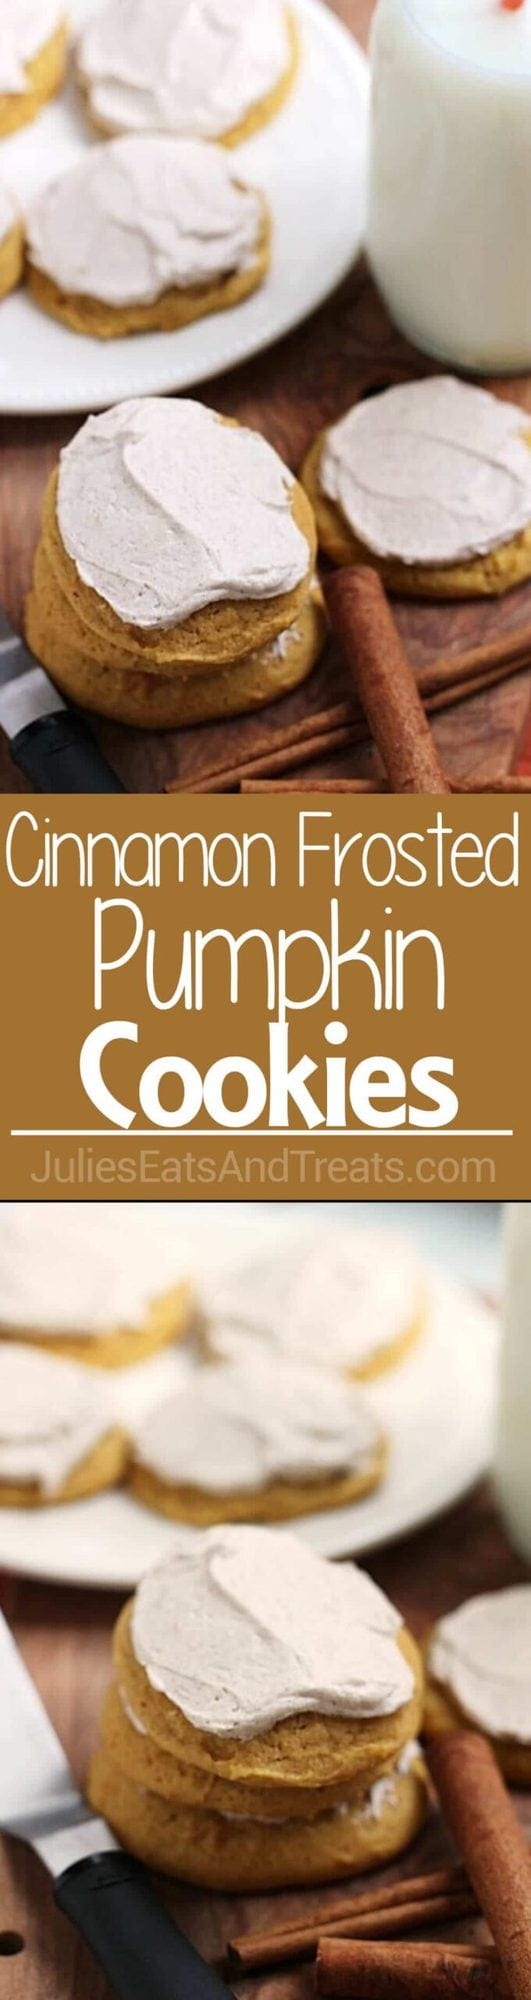 Cinnamon Frosted Pumpkin Cookies - Julie's Eats & Treats